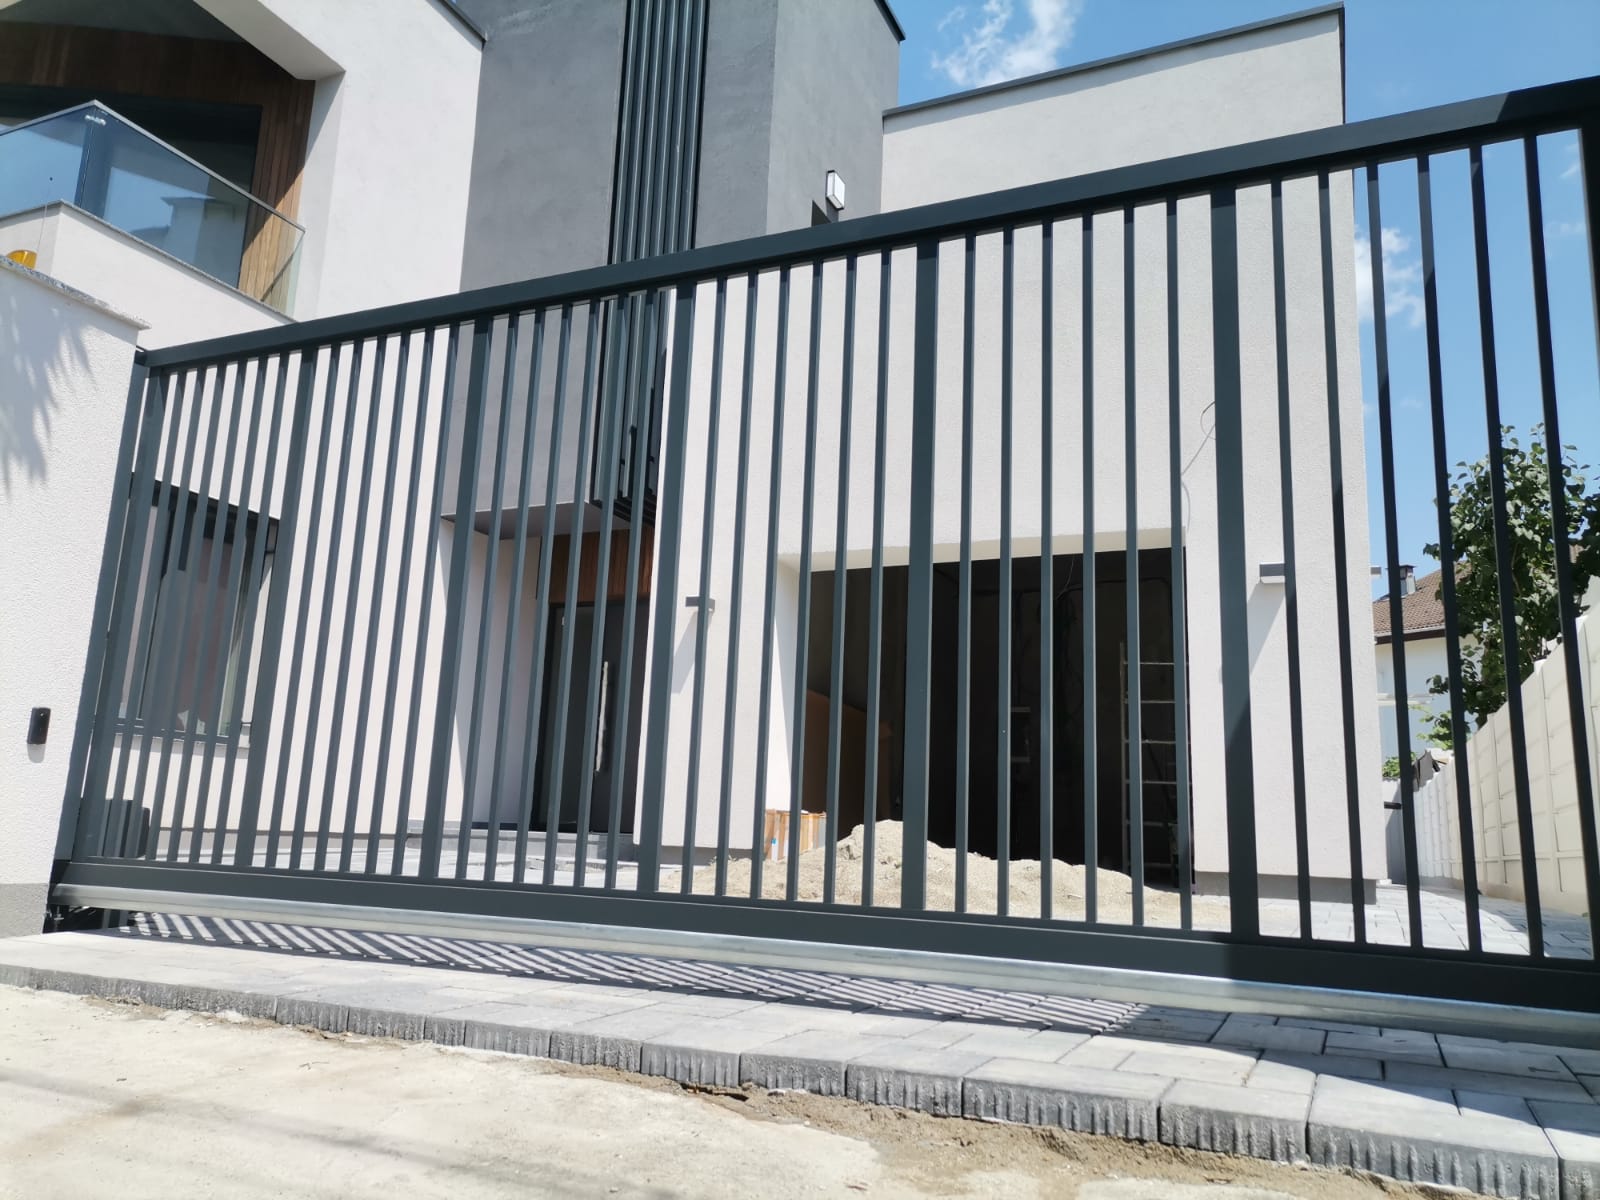 ALUMGATES Detalii gard aluminiu - Porti si garduri din aluminiu pentru amenajari de exterior ALUMGATES